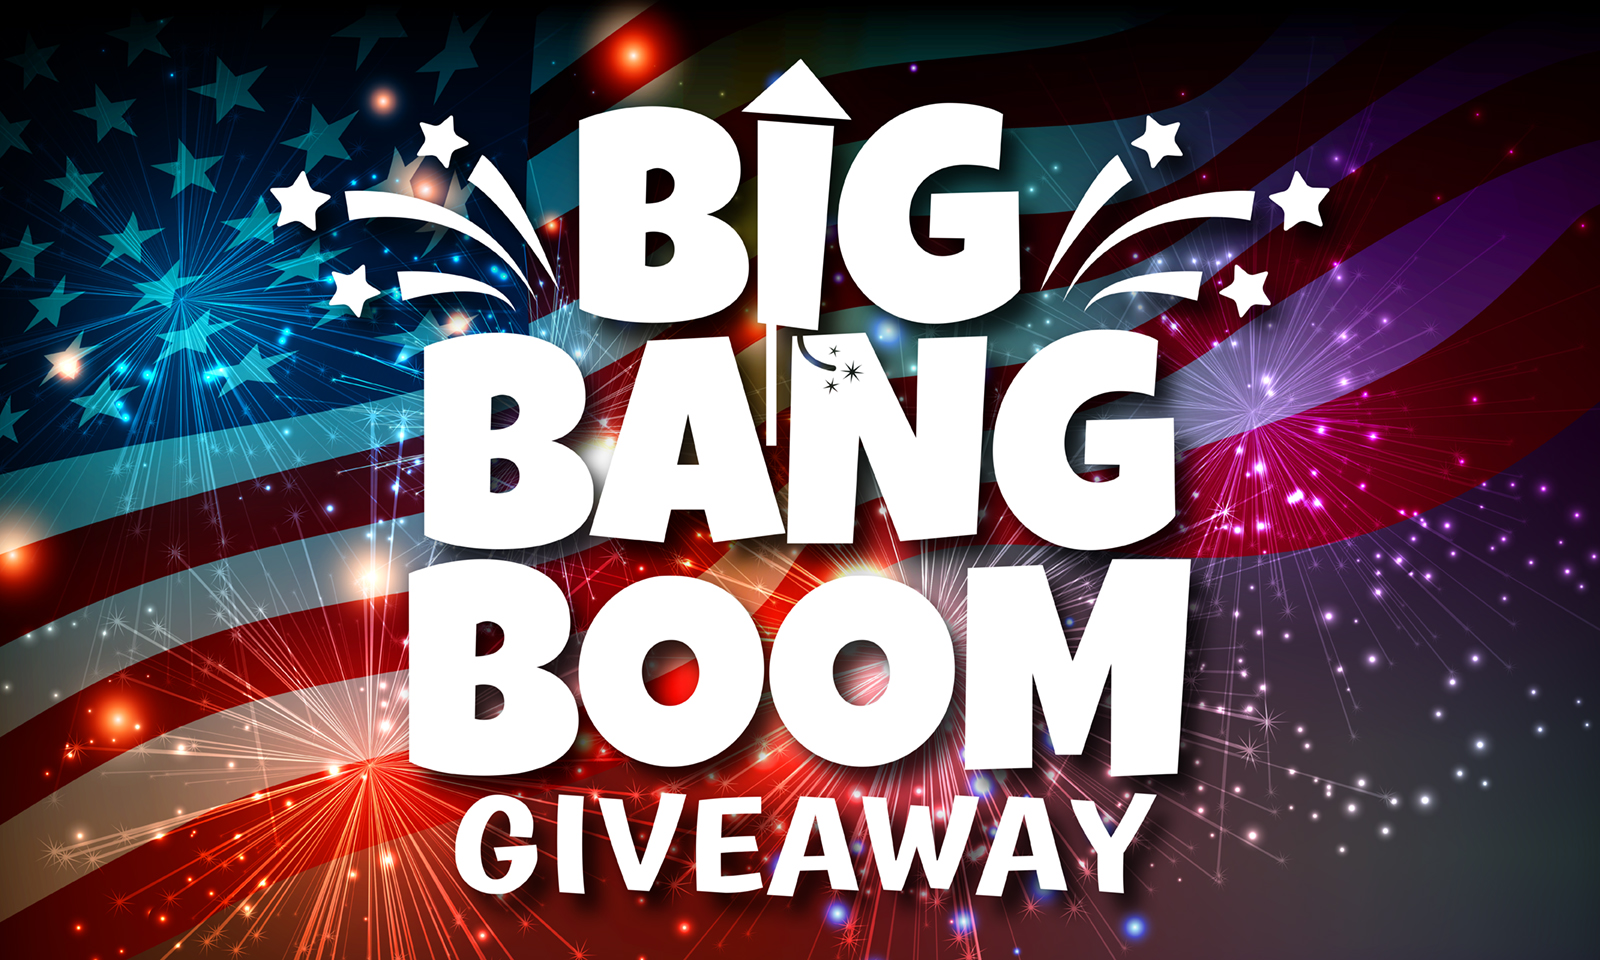 Big Band Boom Giveaway Home Page